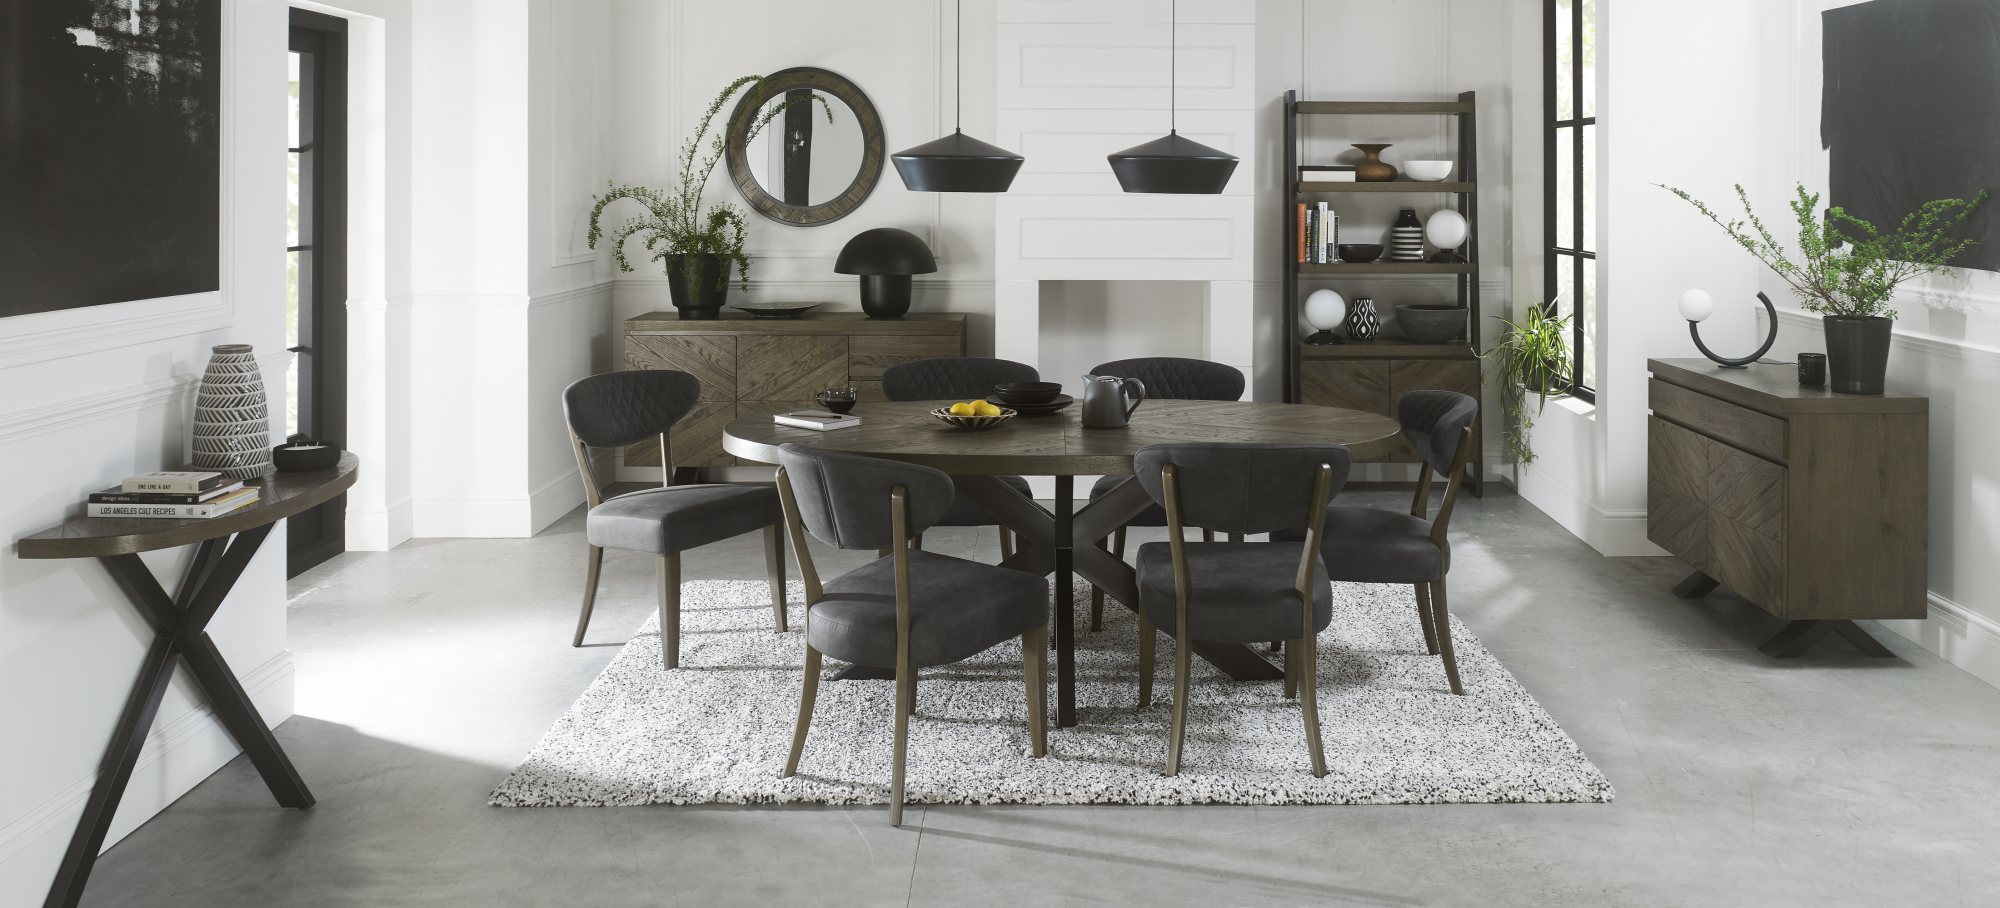 Home Origins Bosco Fumed Oak 6 Seater Dining Table & 6 Bosco Fumed Oak Upholstered Chairs- Dark Grey Fabric- lifestyle